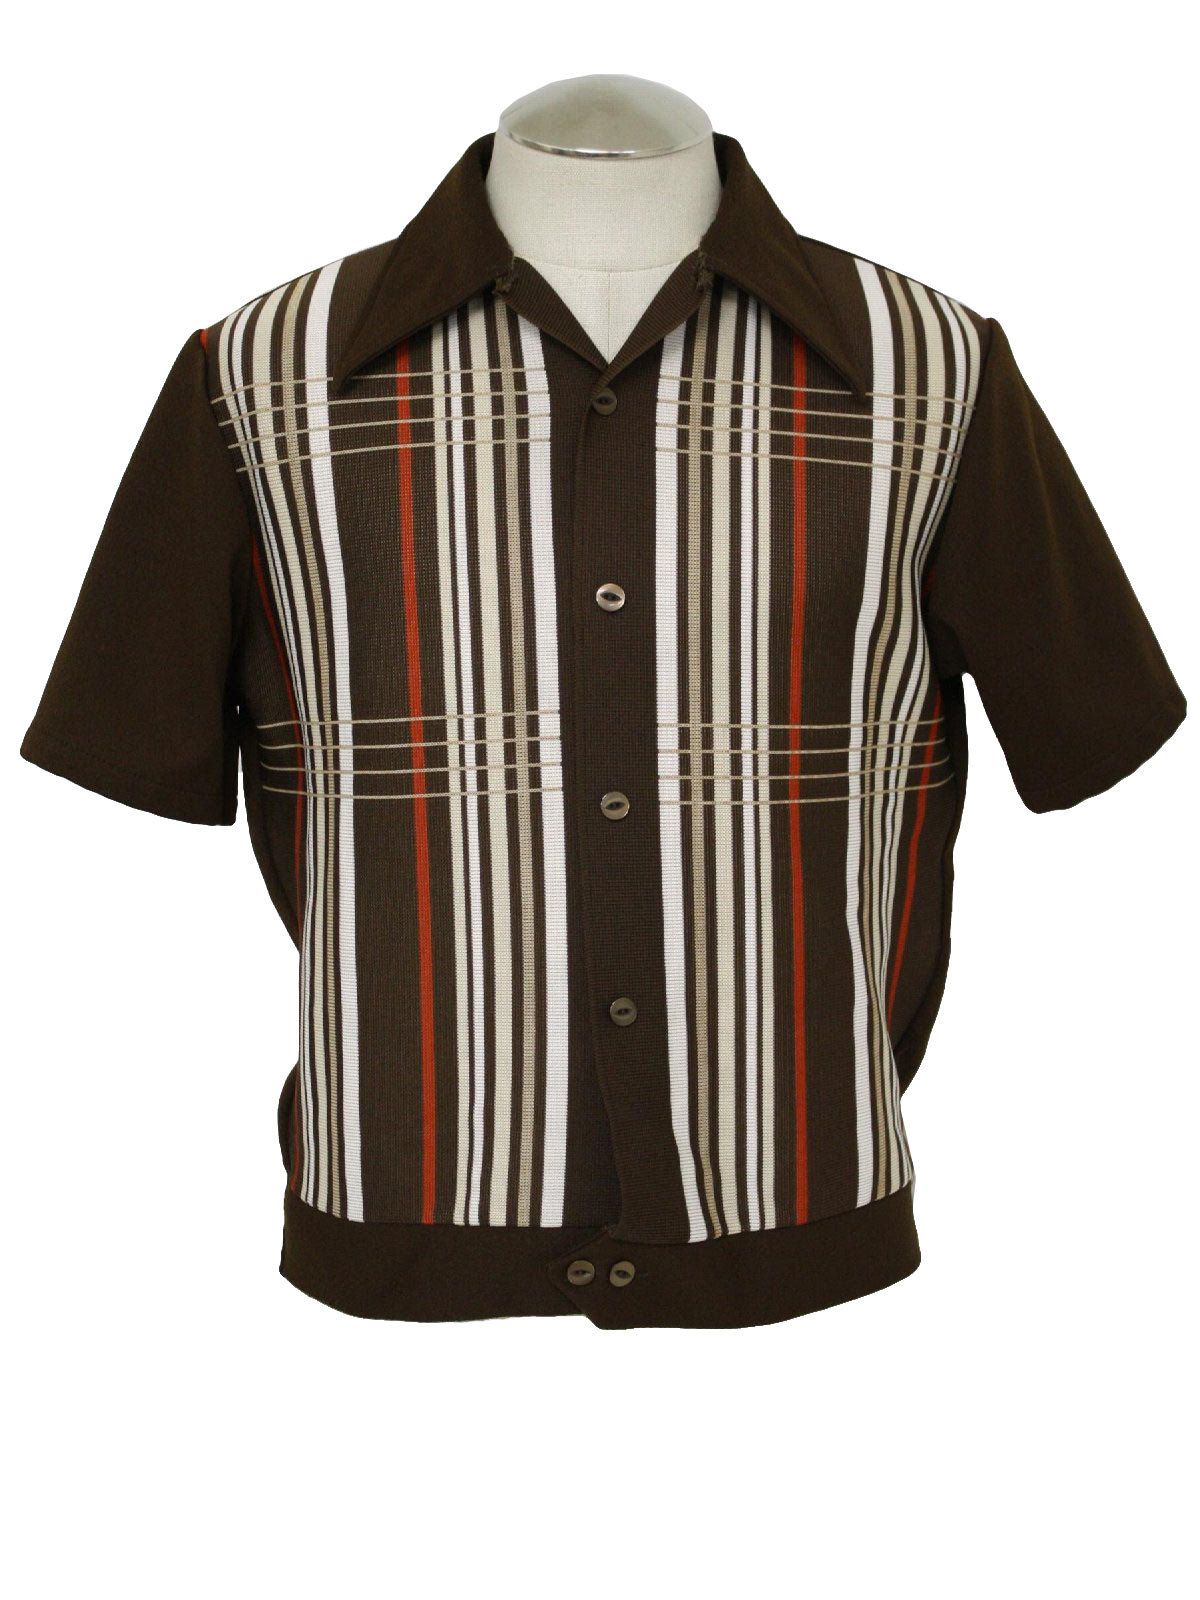 Gaucho Seventies Vintage Jacket: 70s -Gaucho- Mens deep brown, tan ...